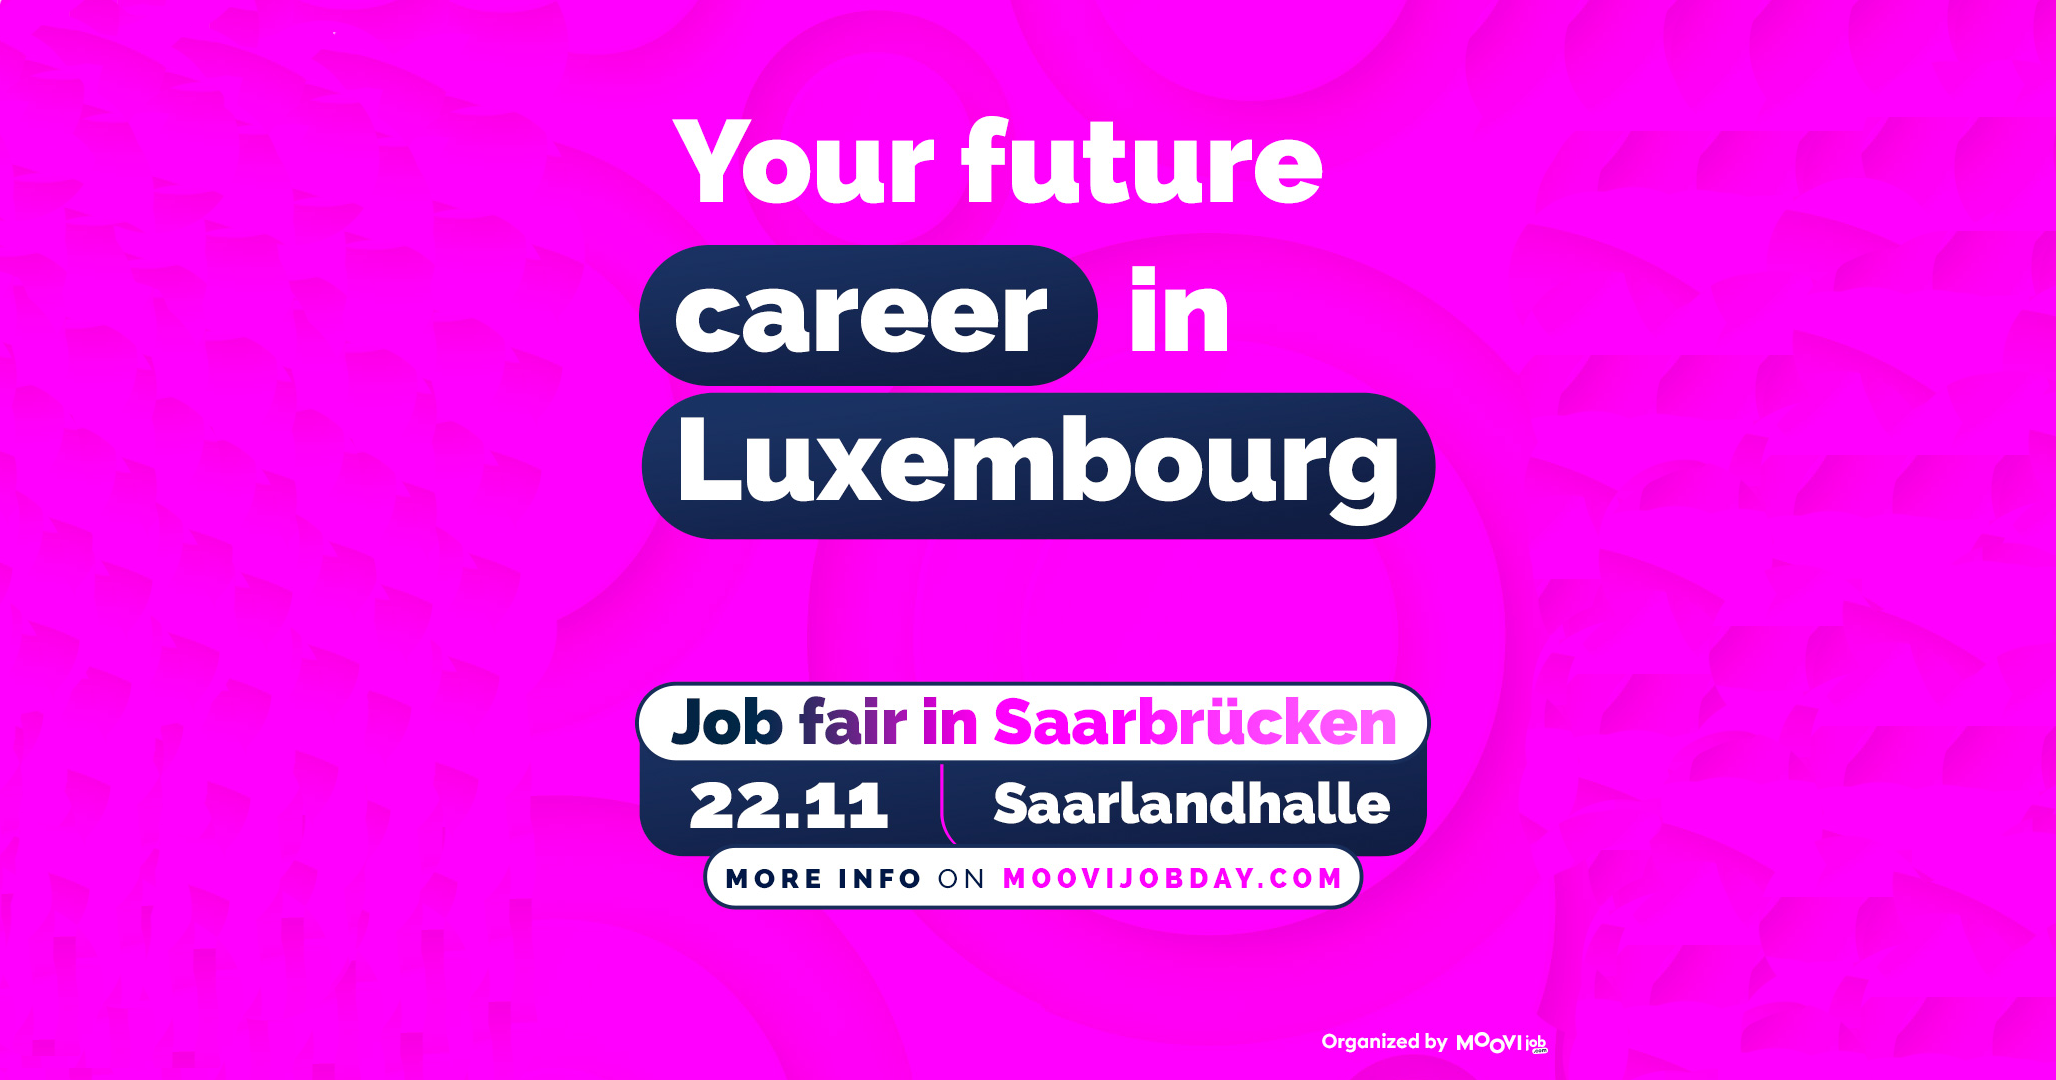 A job and career fair will be held in Saarbrücken